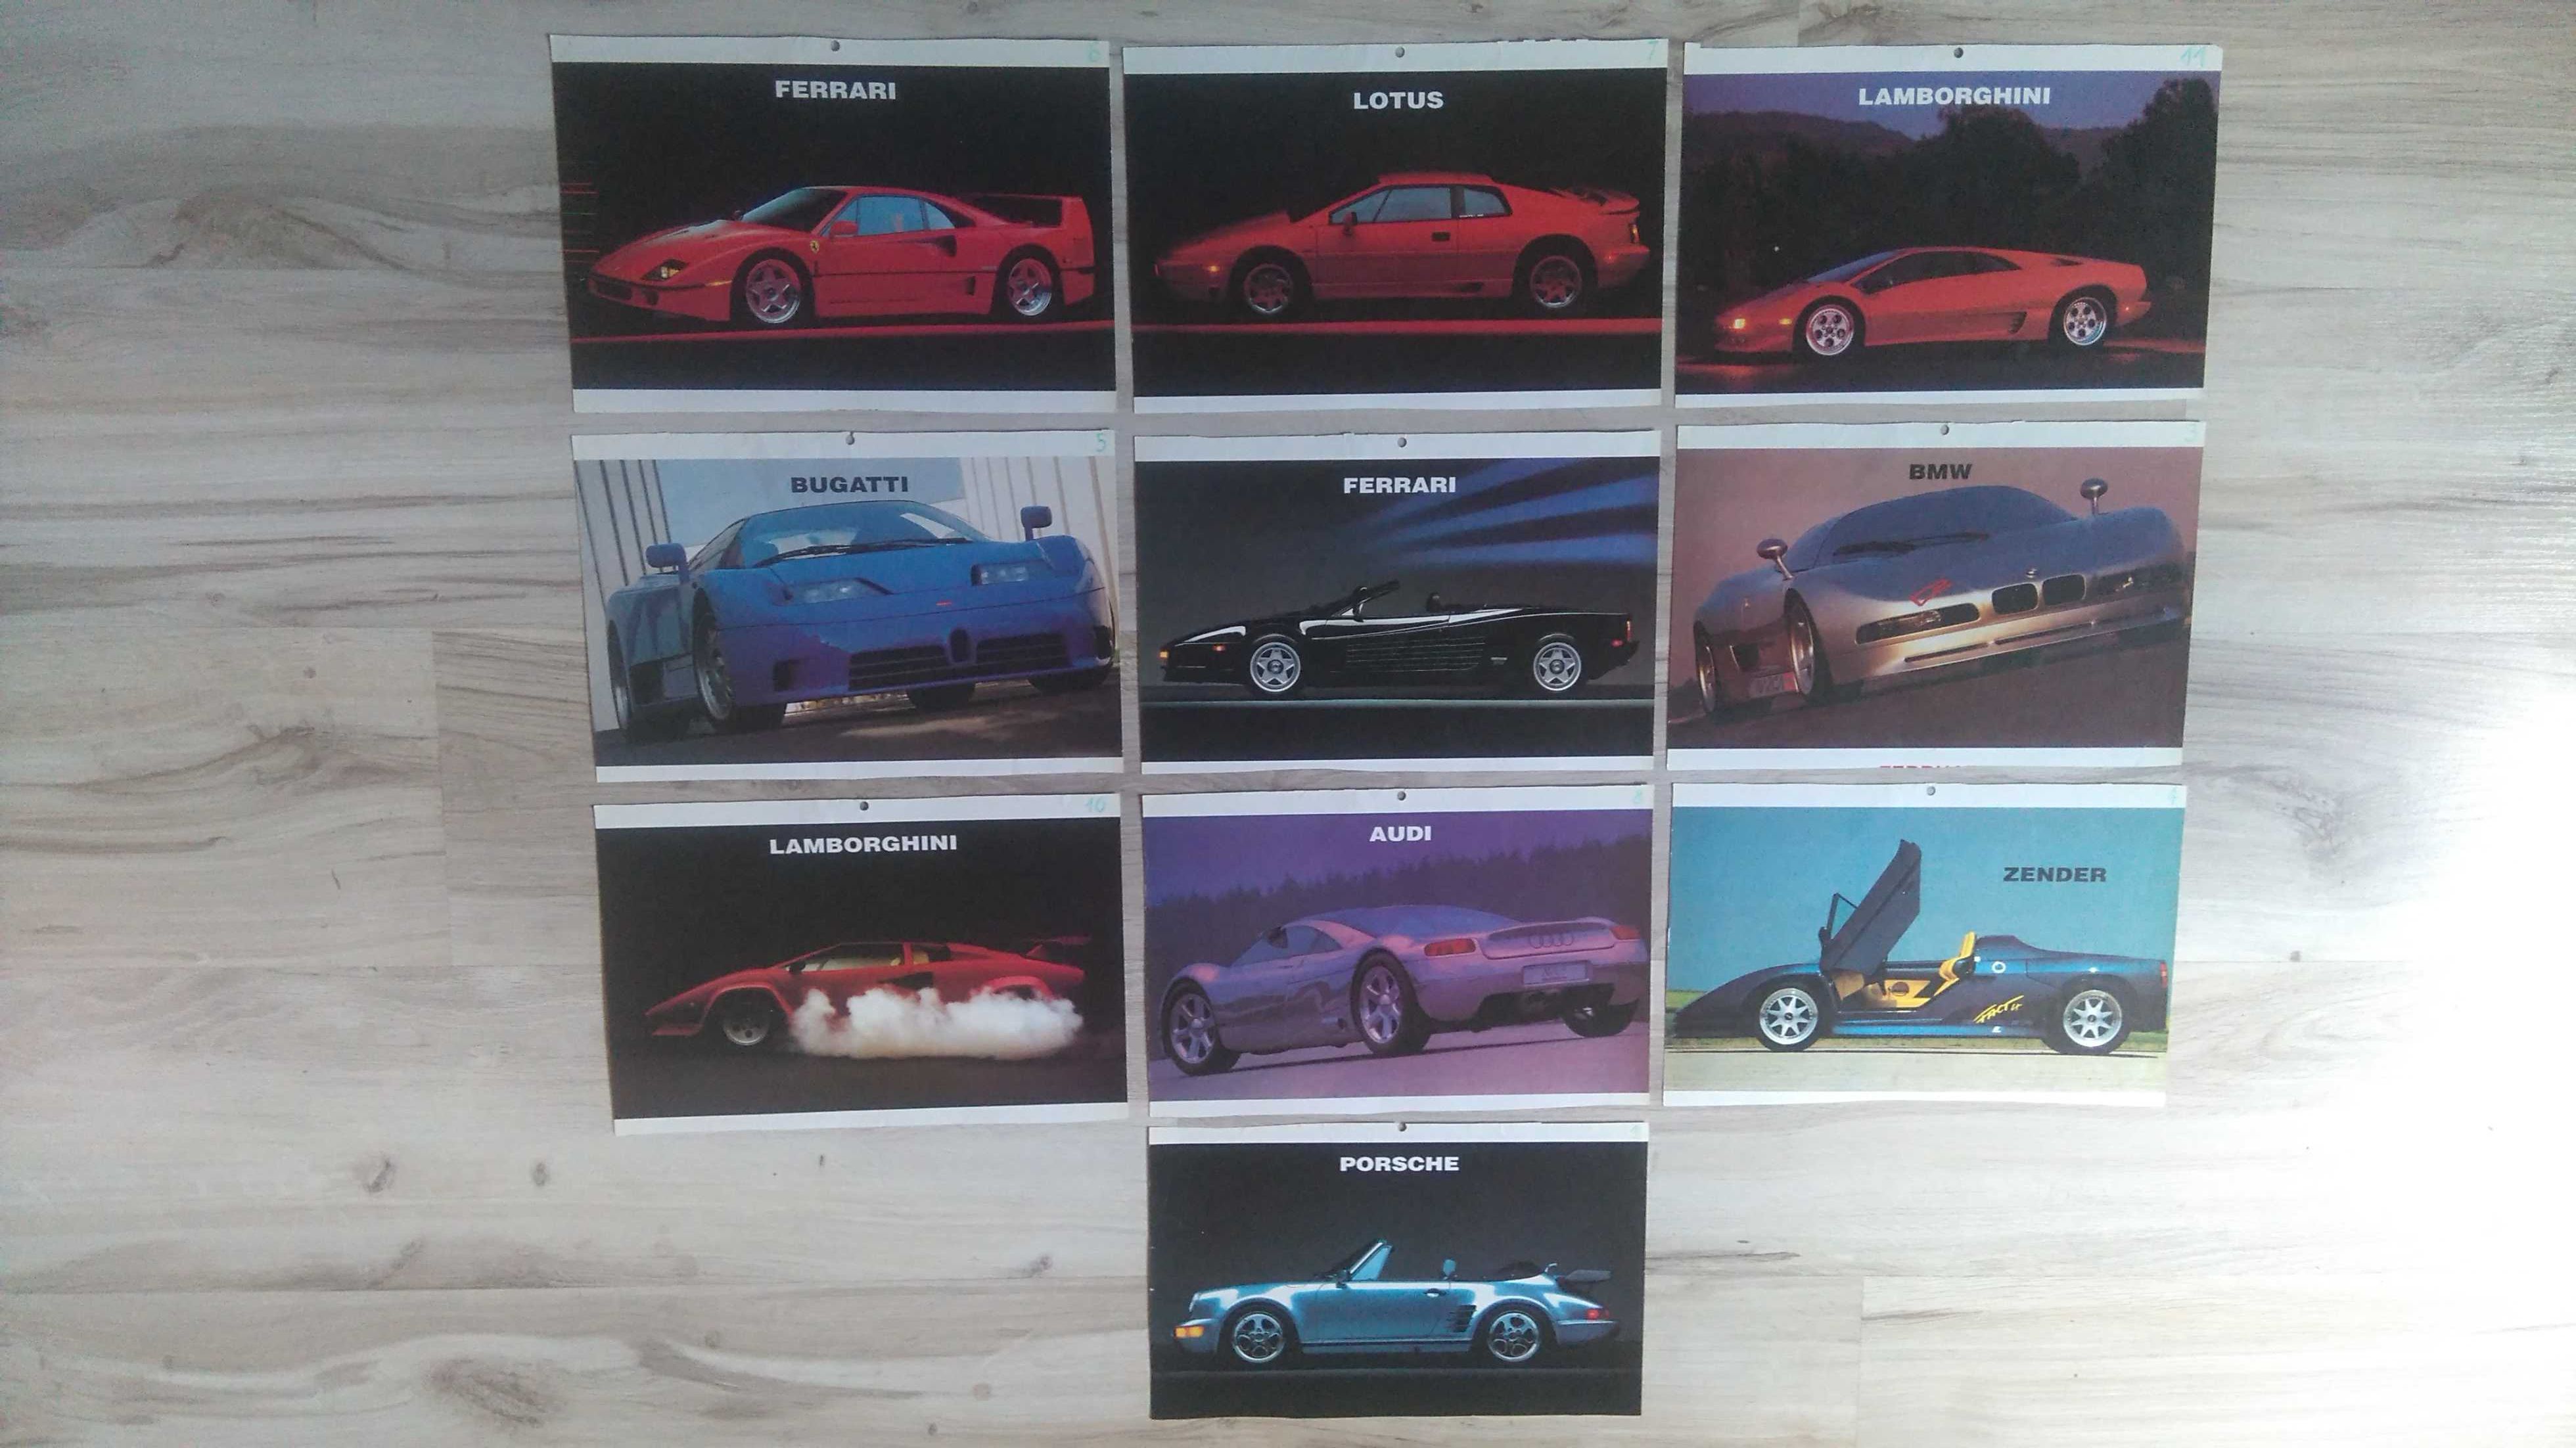 Plakat FERRARI TESTAROSSA - Plakaty SuperSamochodów z lat 90